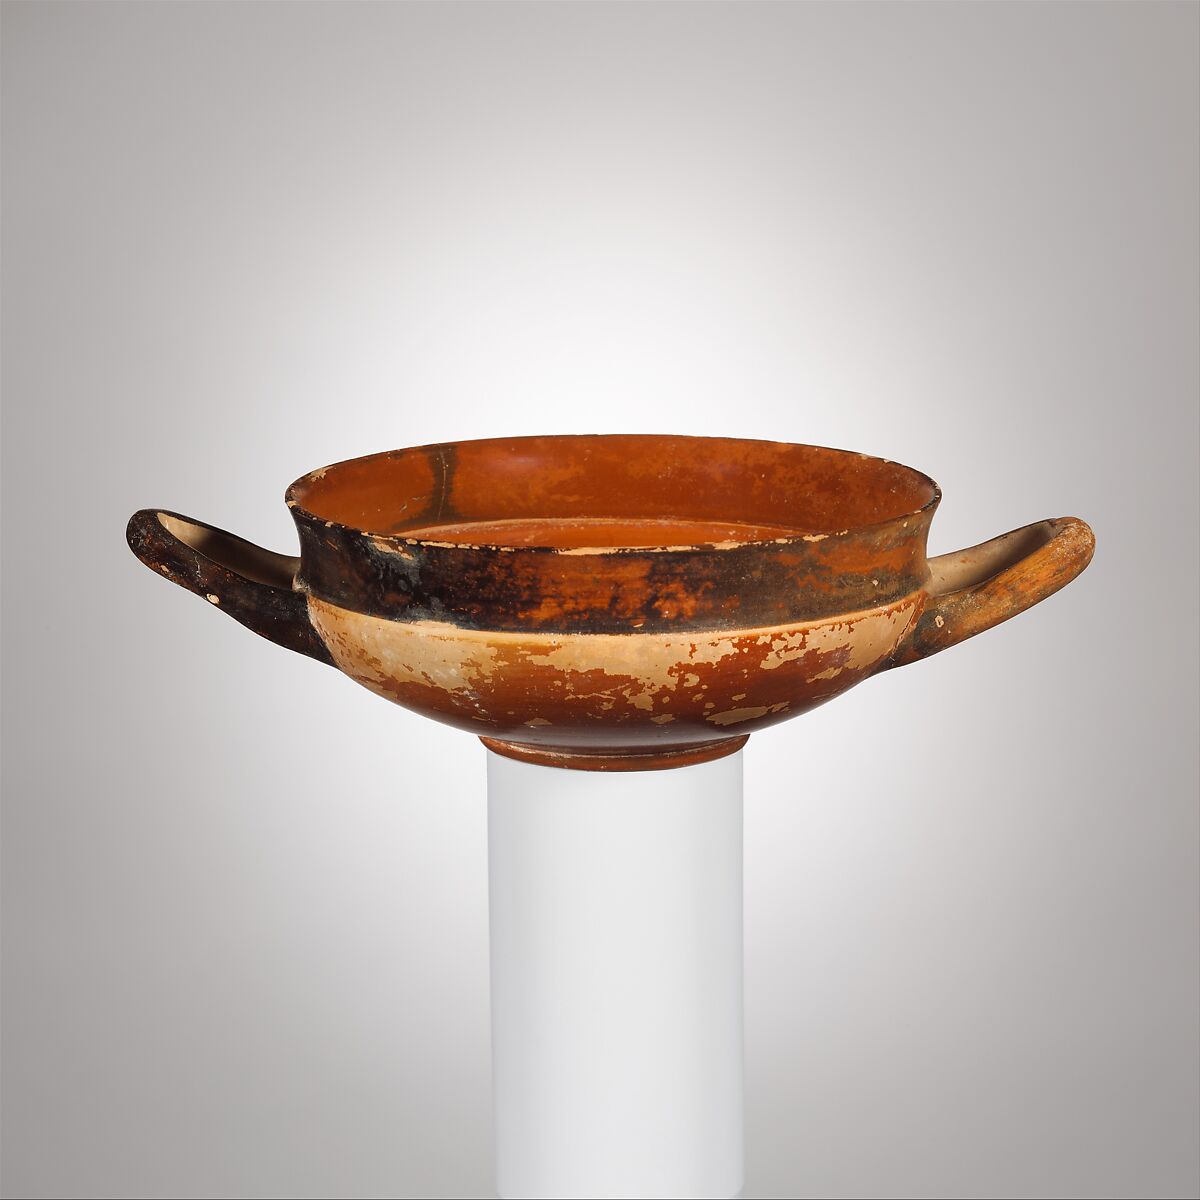 Terracotta stemless kylix (drinking cup), Terracotta, Greek, Attic 